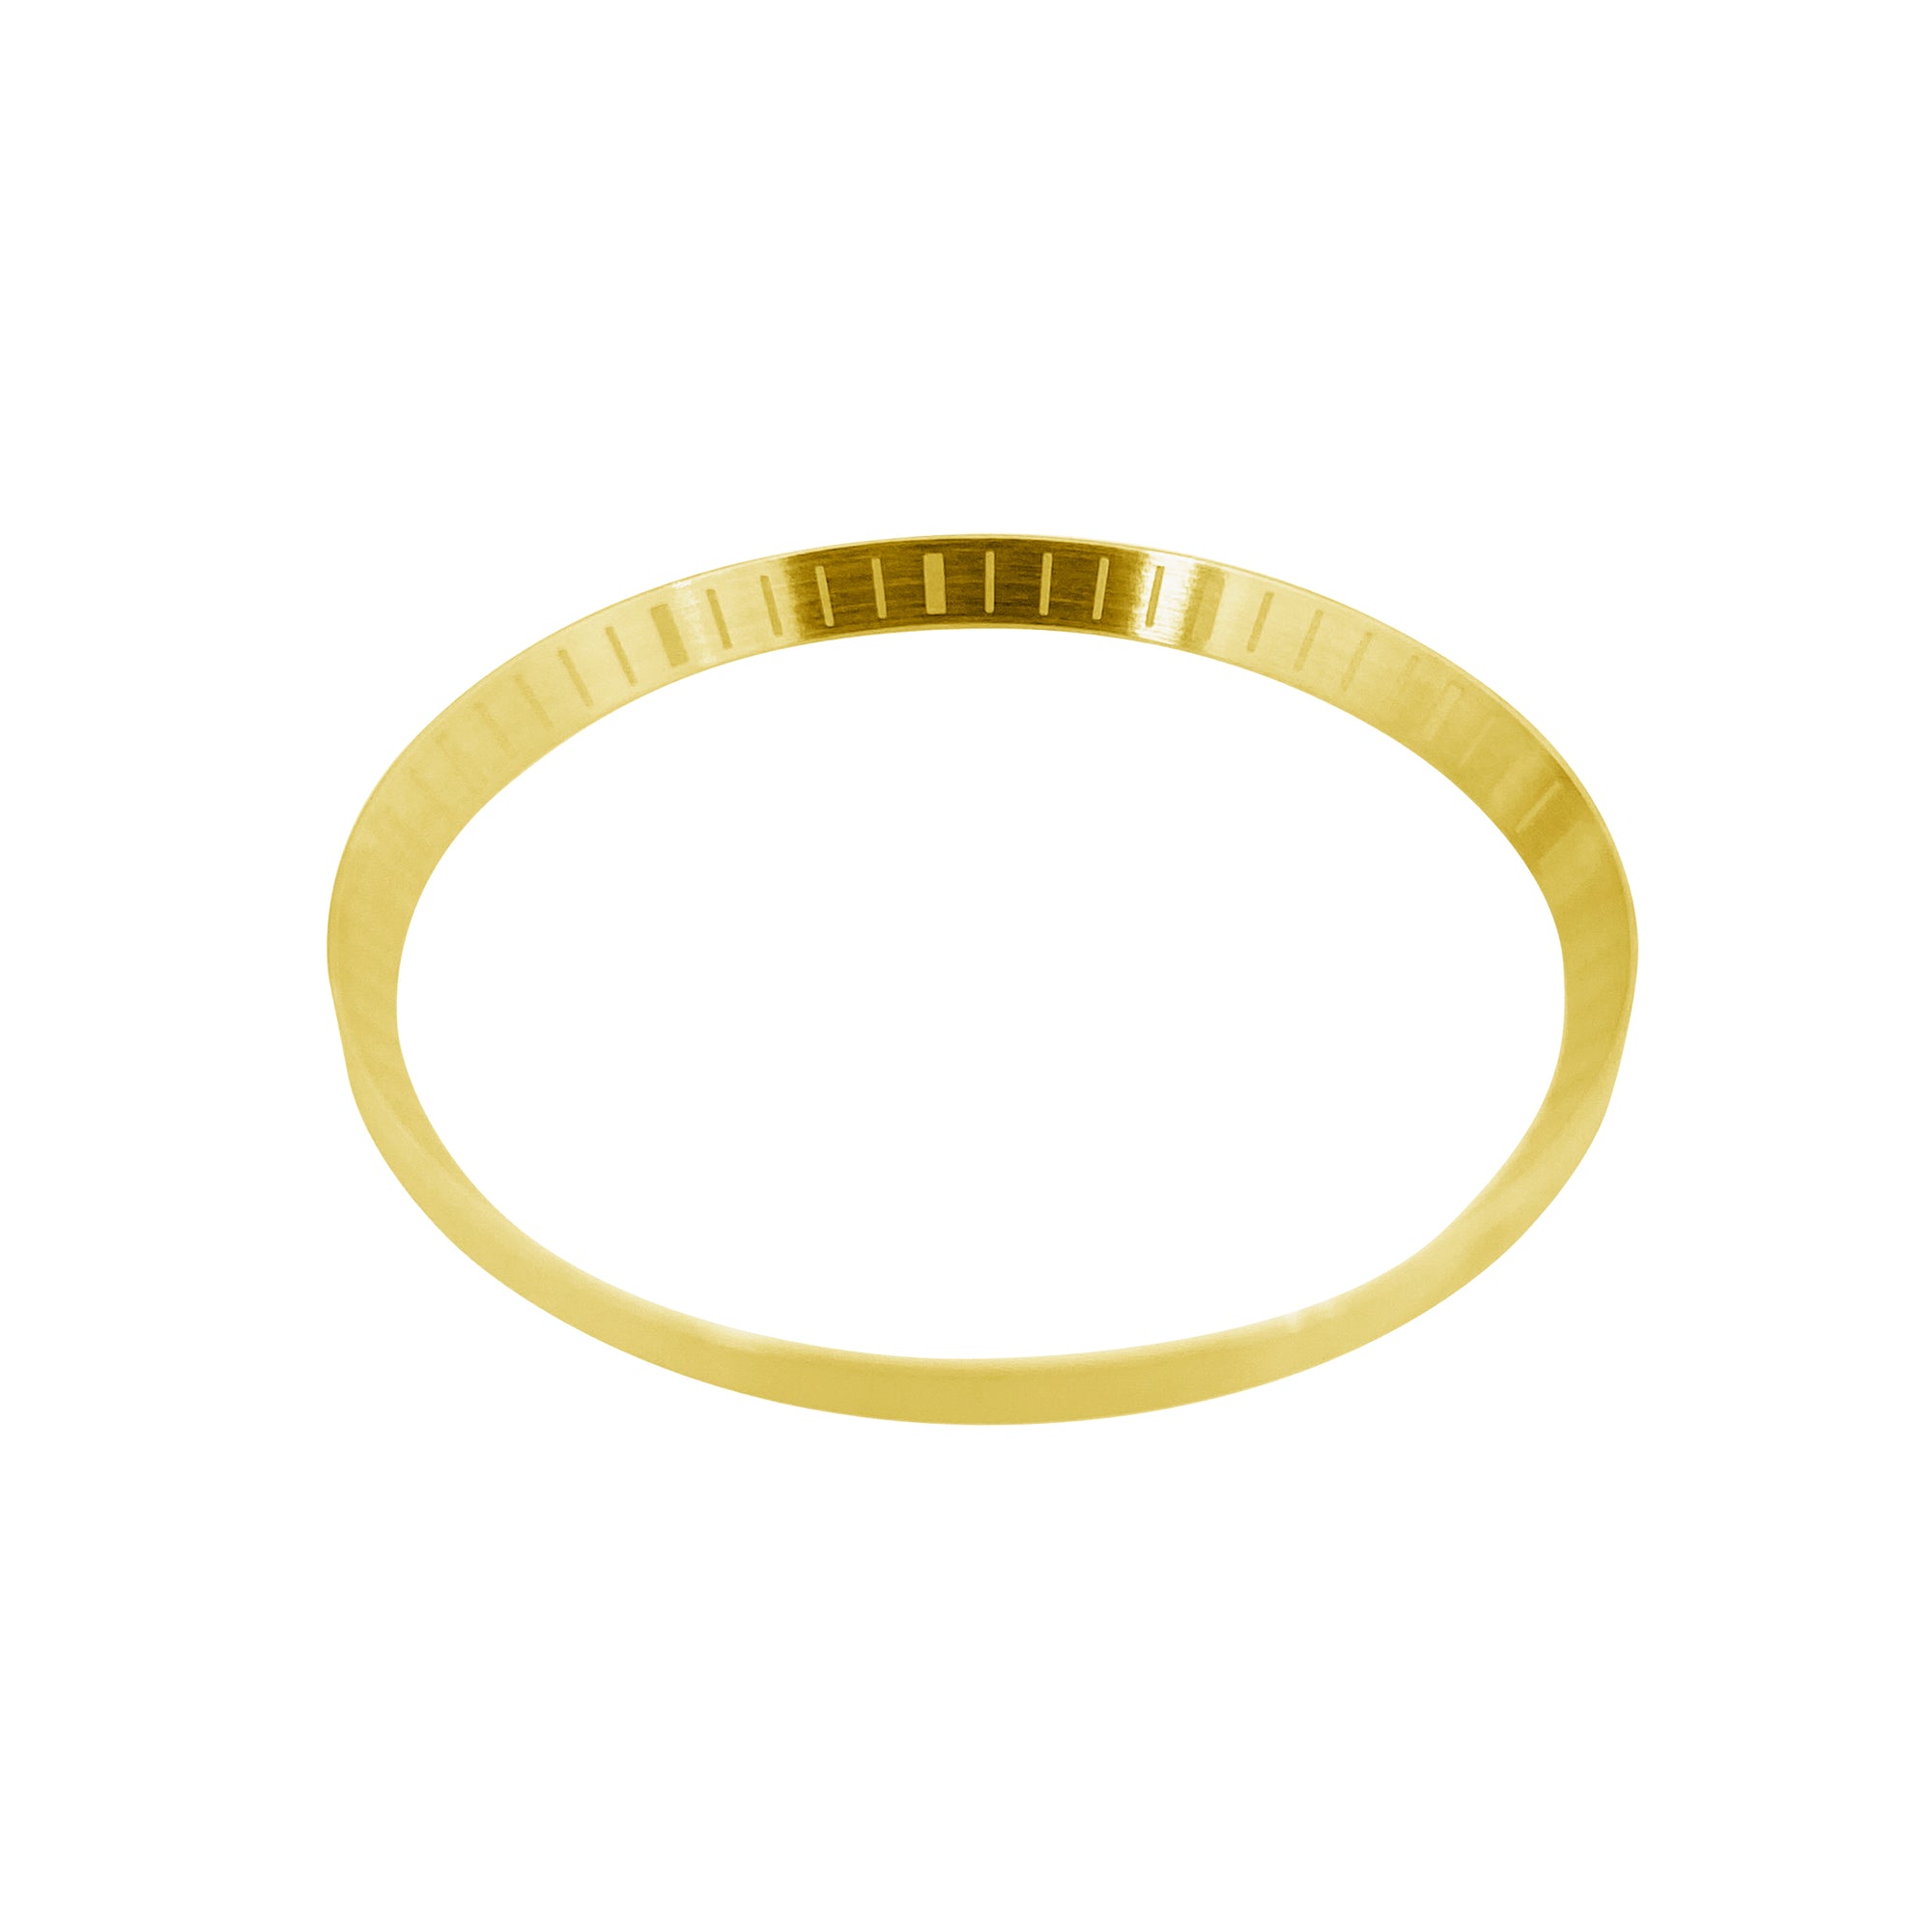 Chapter Ring - SKX007/SRPD - Brushed Gold w Engraved Markers